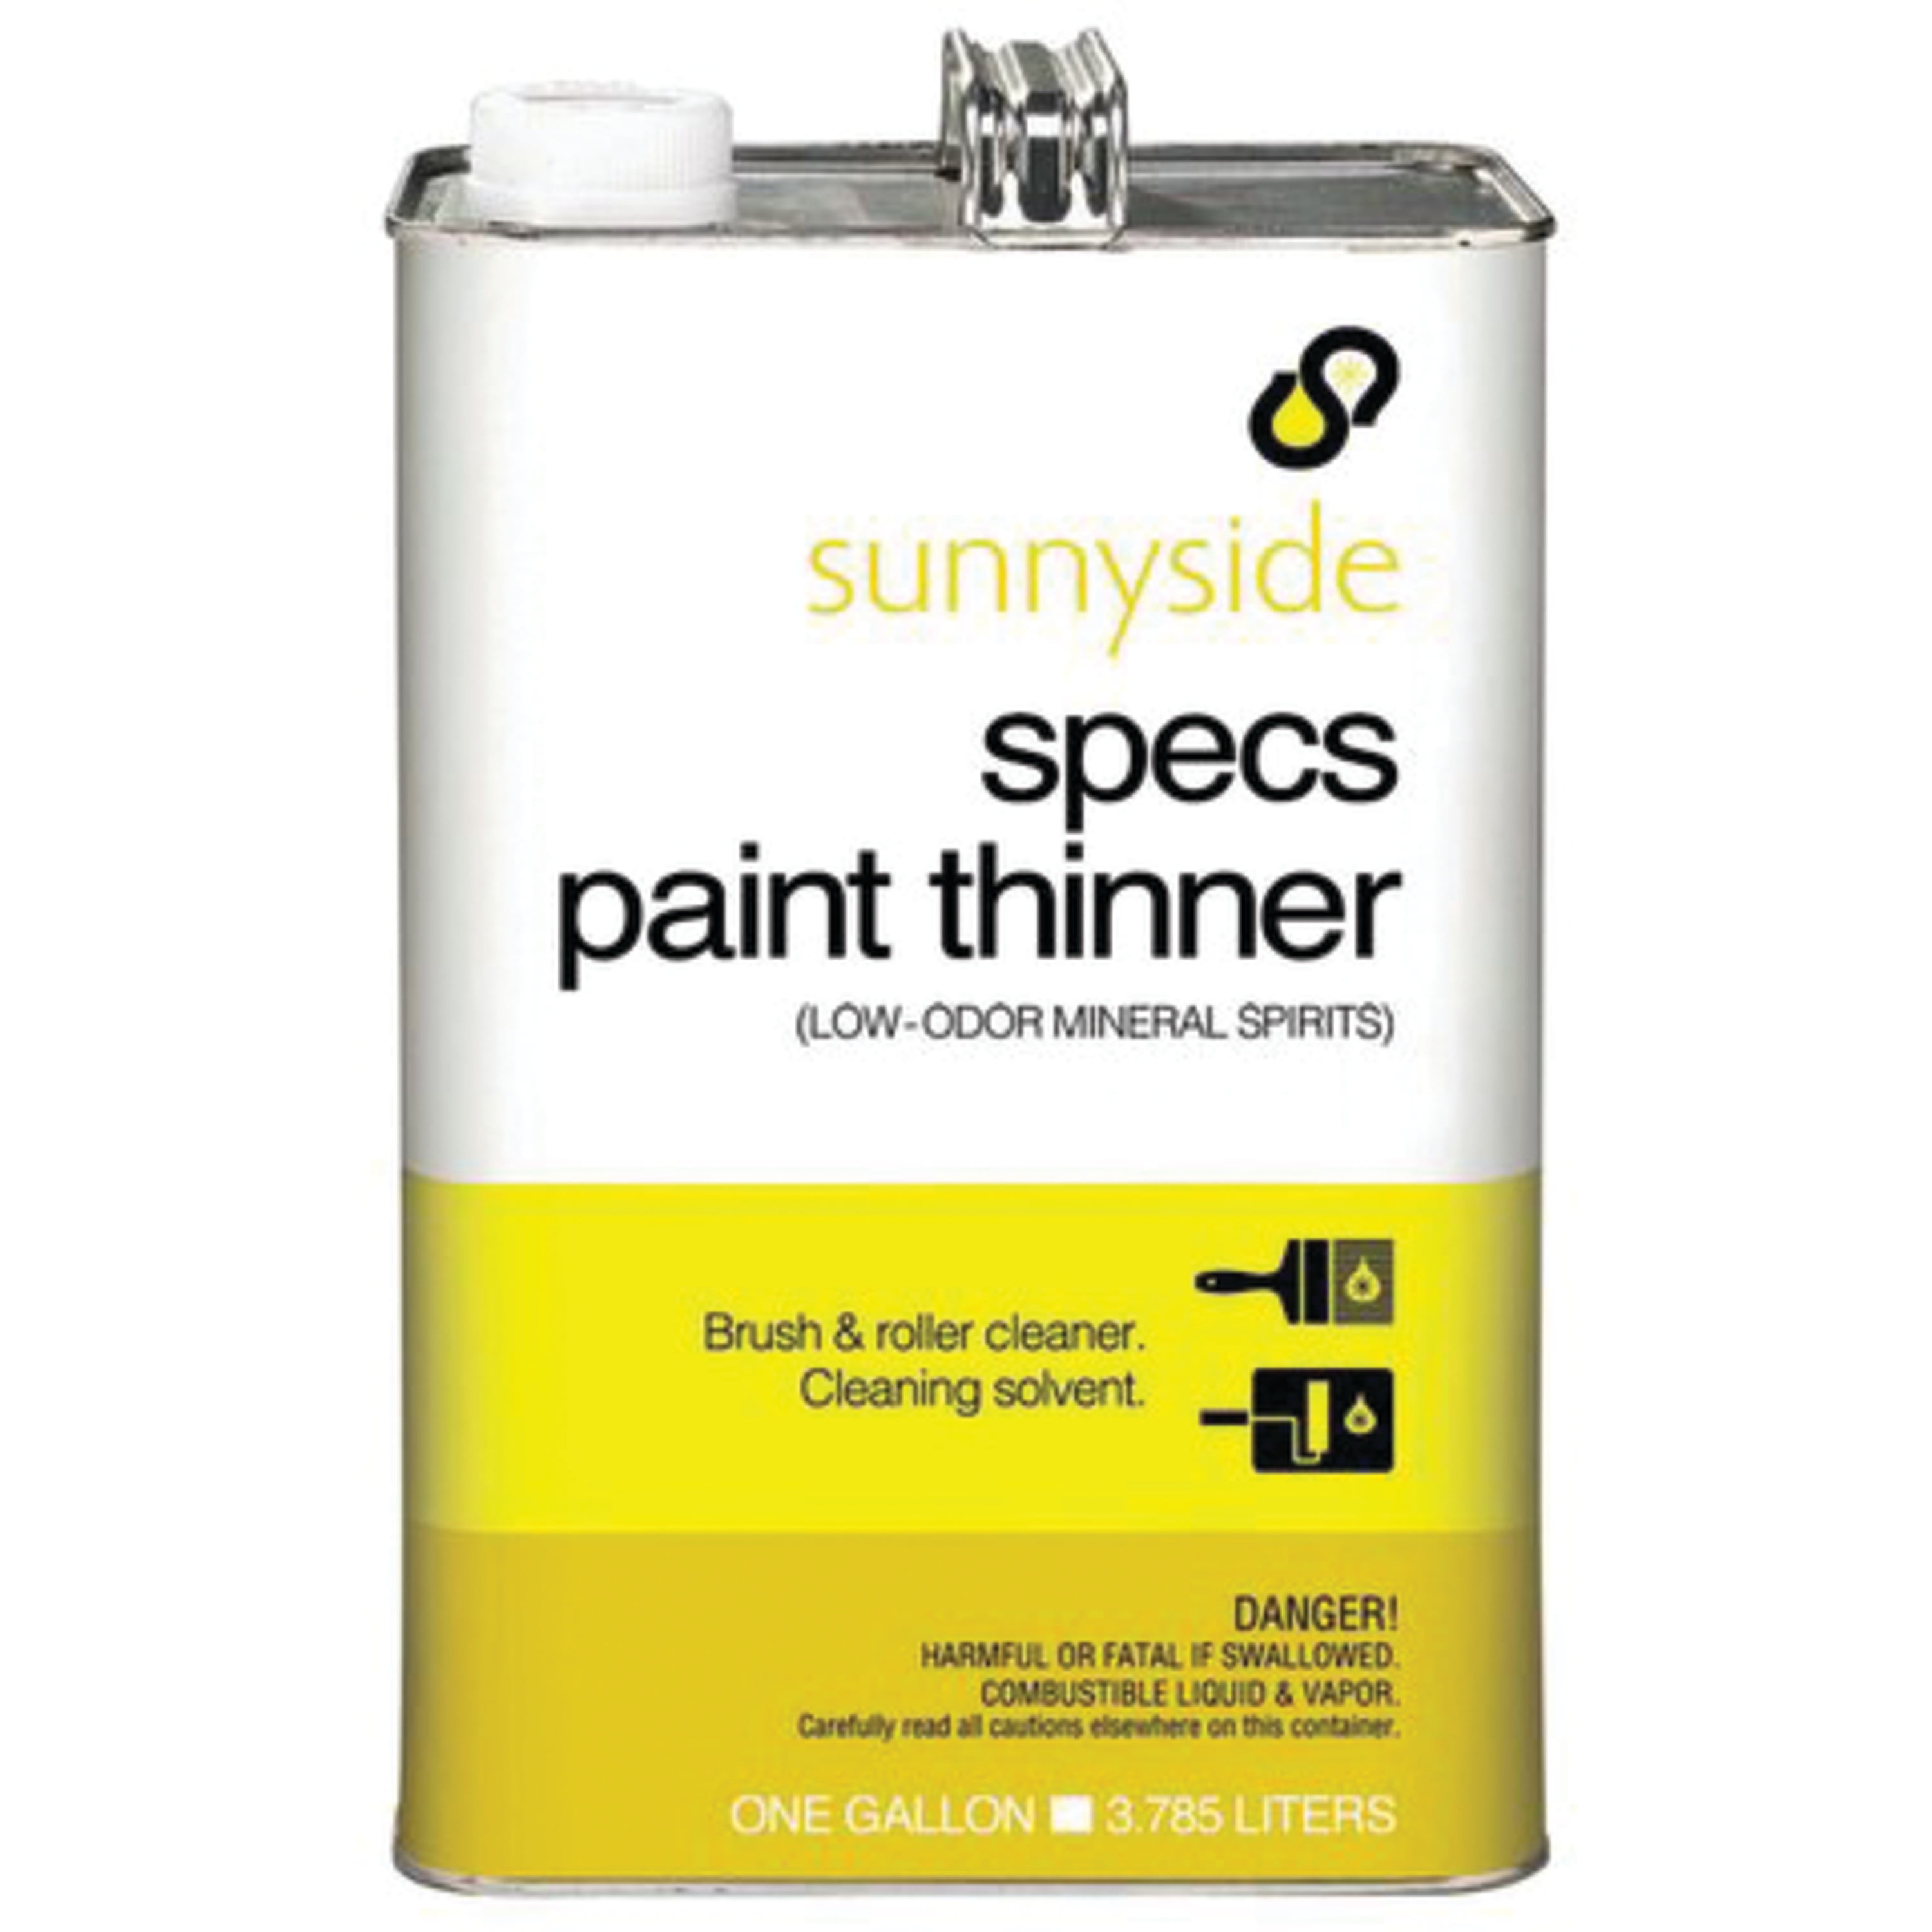 Sunnyside Corporation Specs Paint Thinner 1 quart - Pittsfield, MA